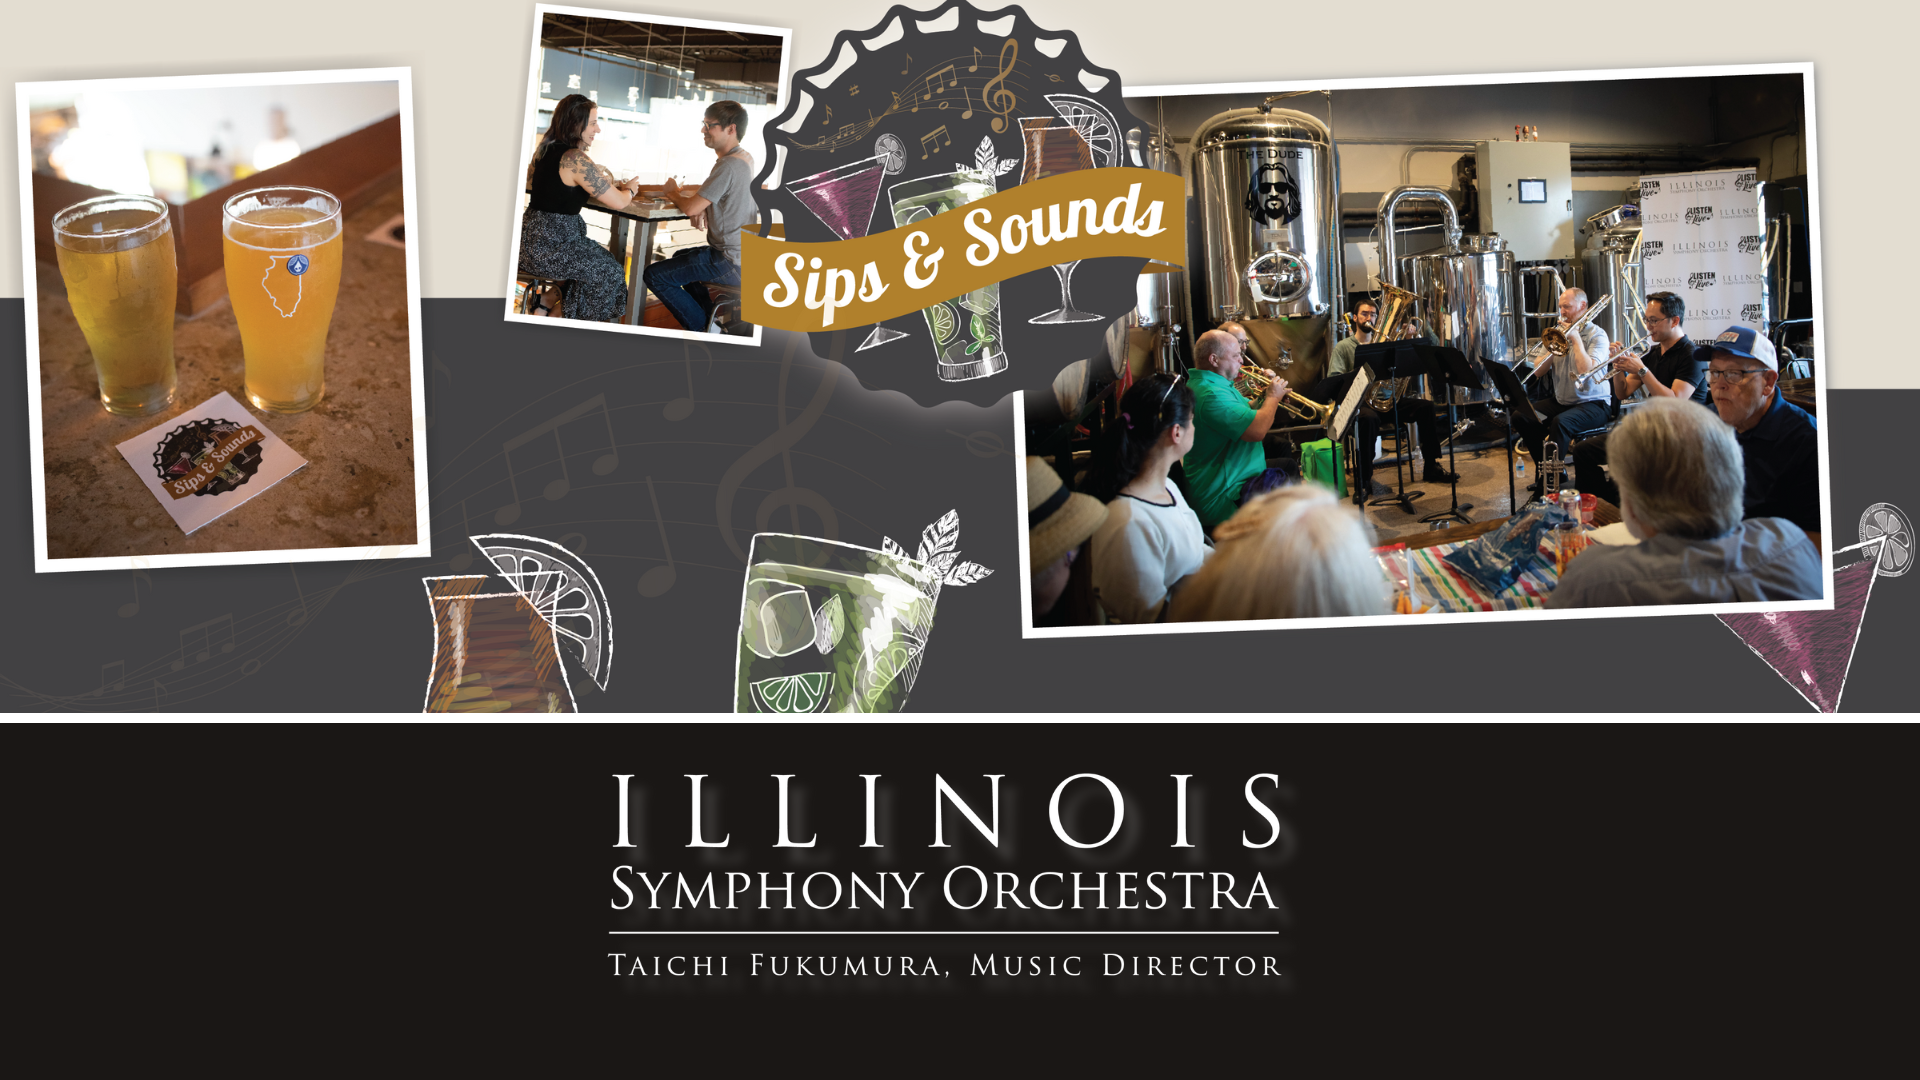 Sips & Sounds, String Quartet - Illinois Symphony Orchestra